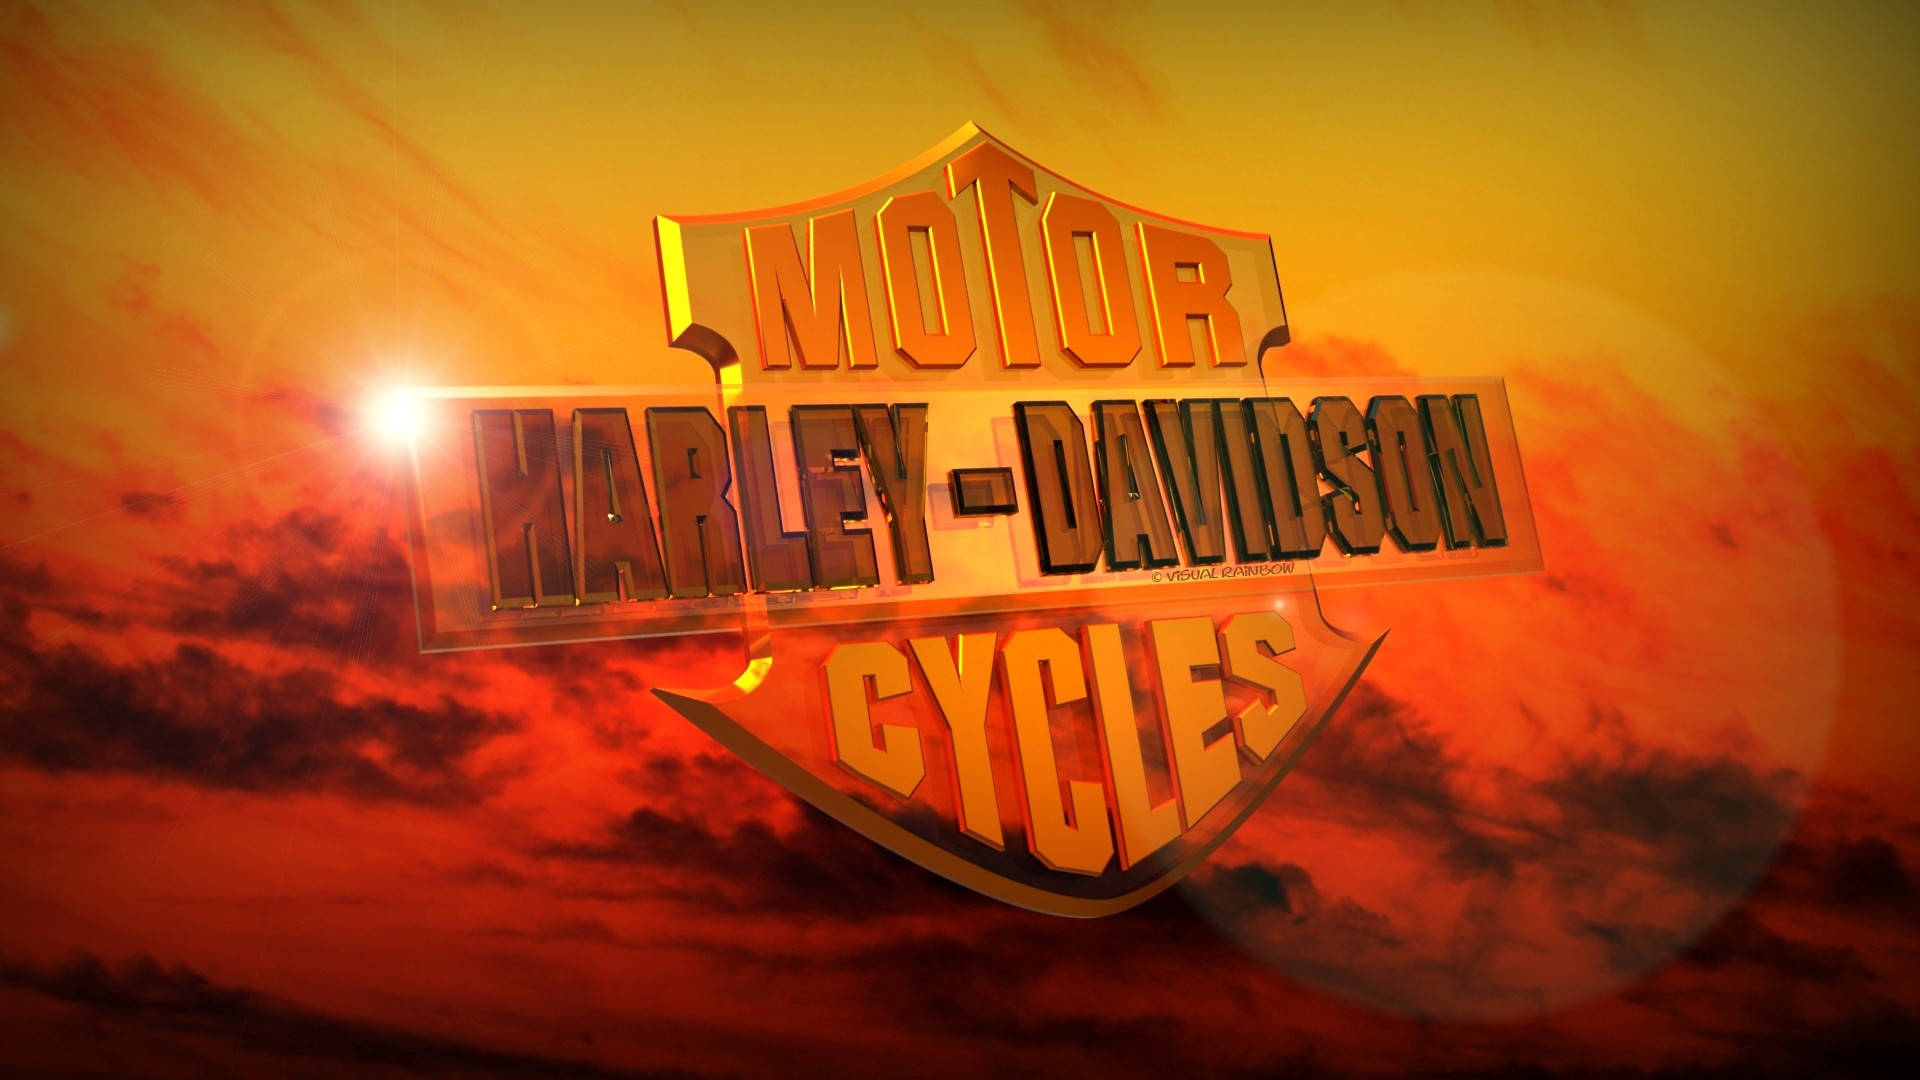 Harley Davidson Logo Sunset Art